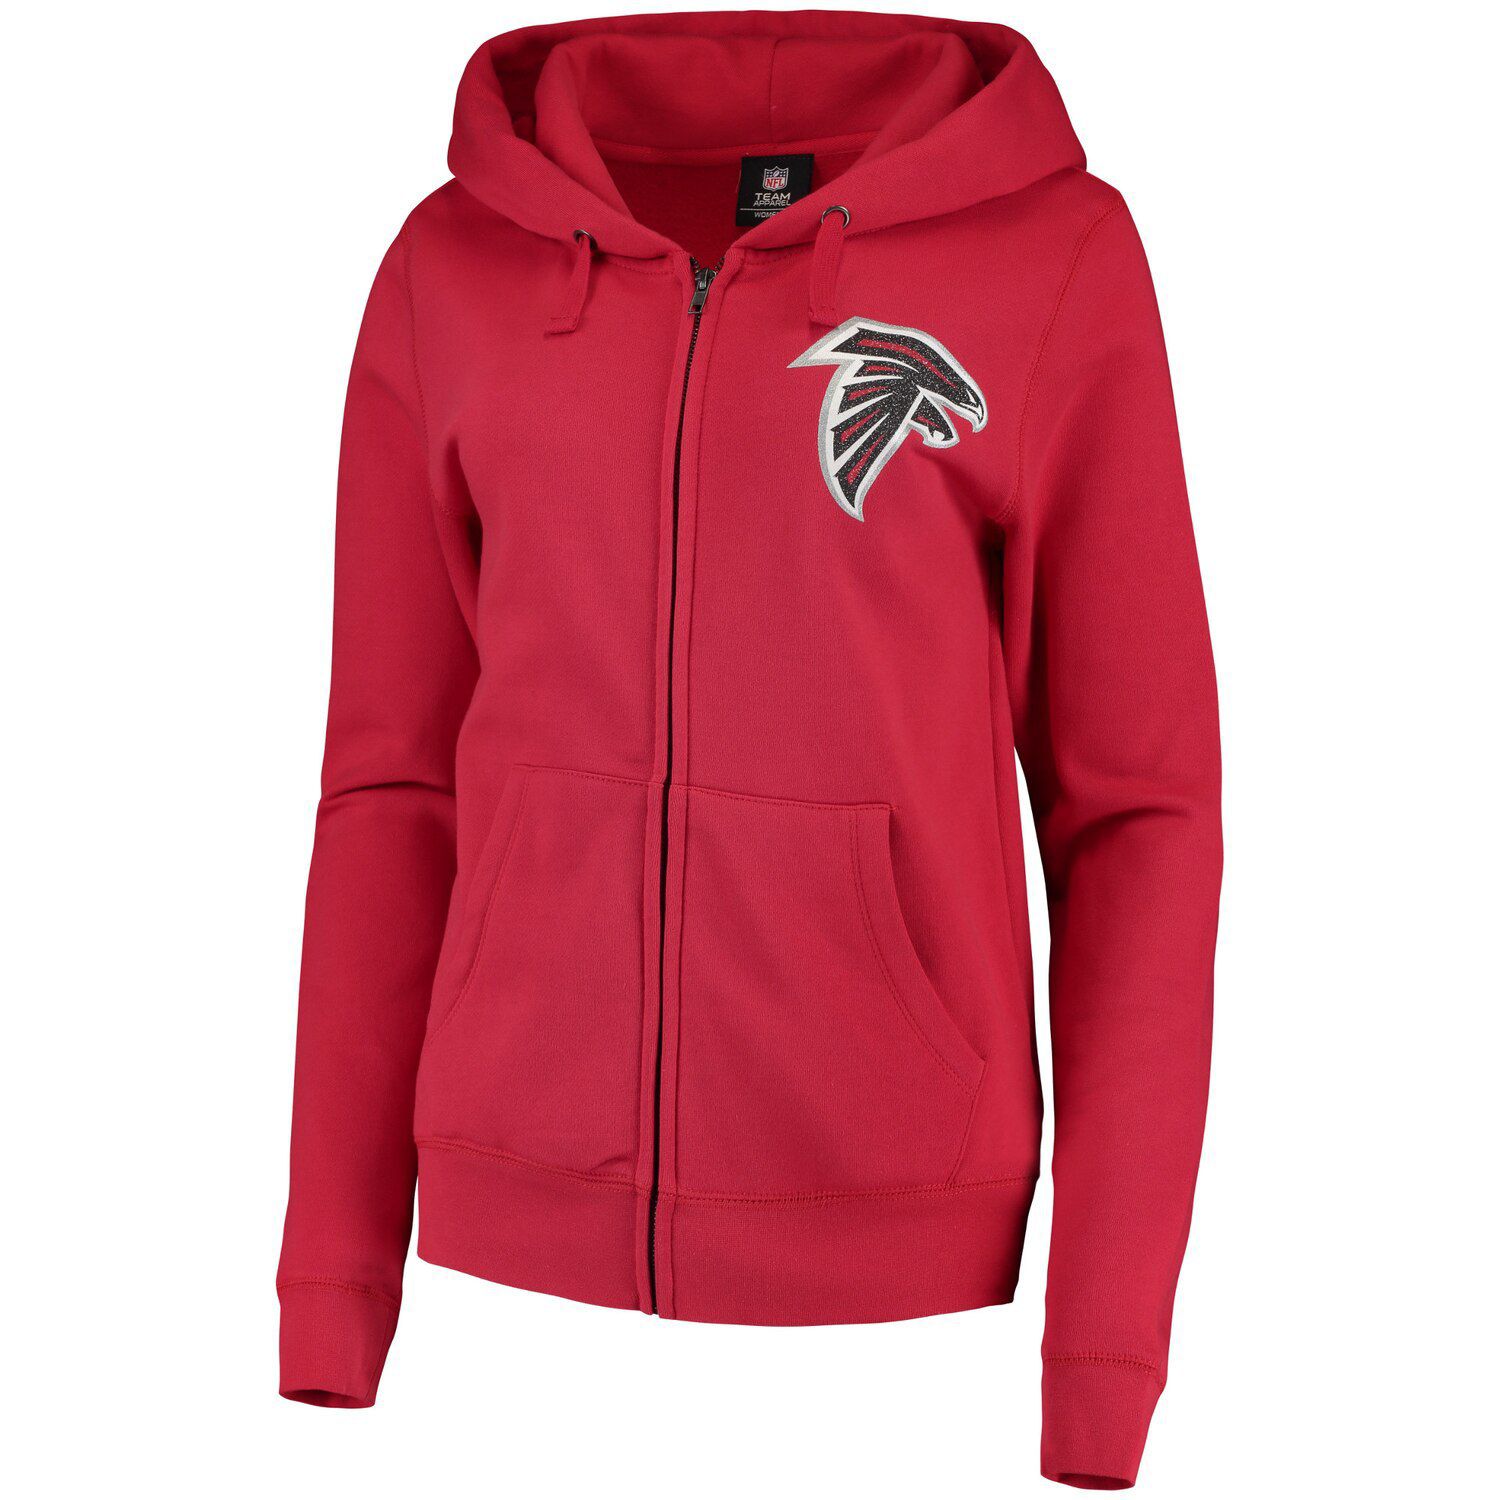 atlanta falcons zip up hoodie